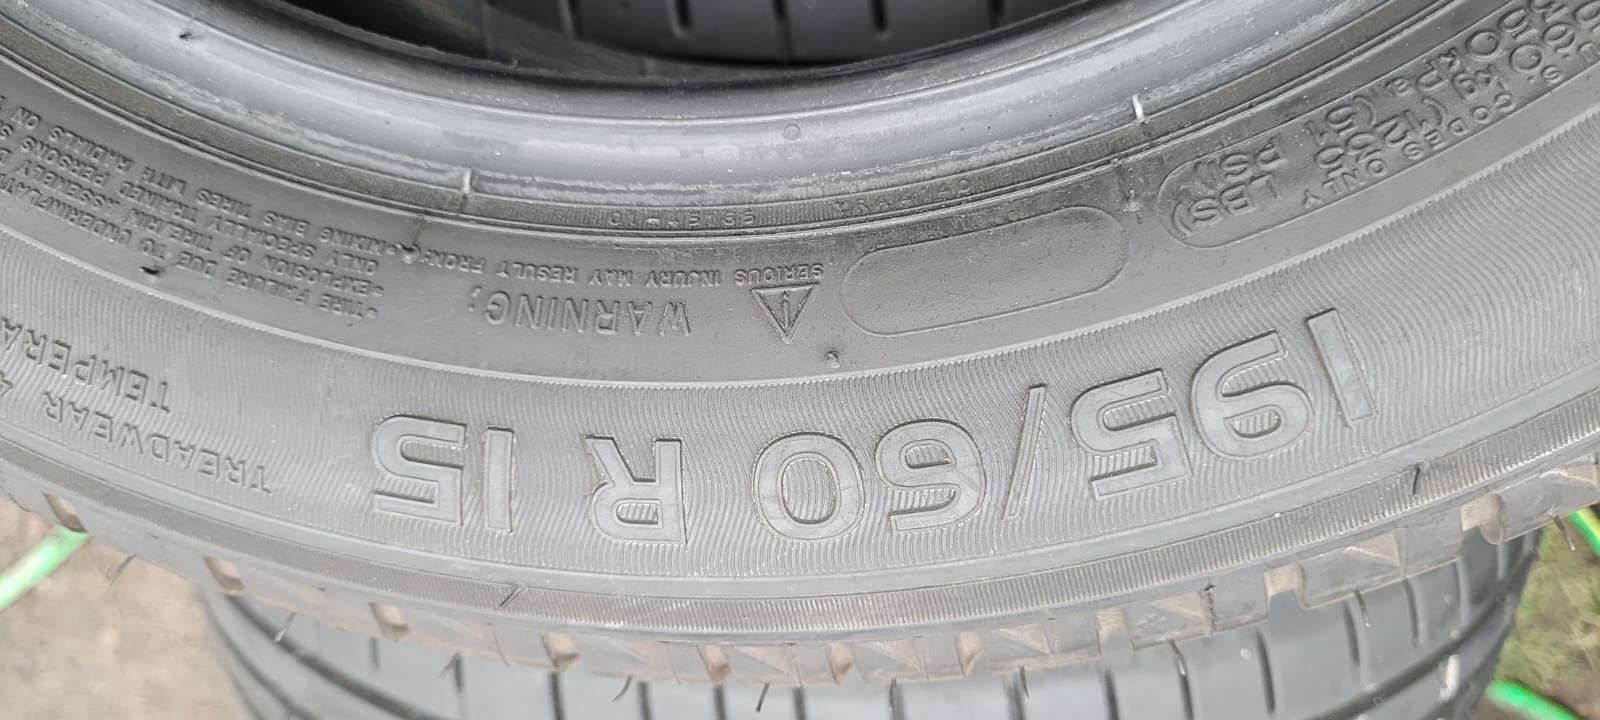 Demo Opony letnie Michelin 195/60r15 komplet 2020r +Gratis